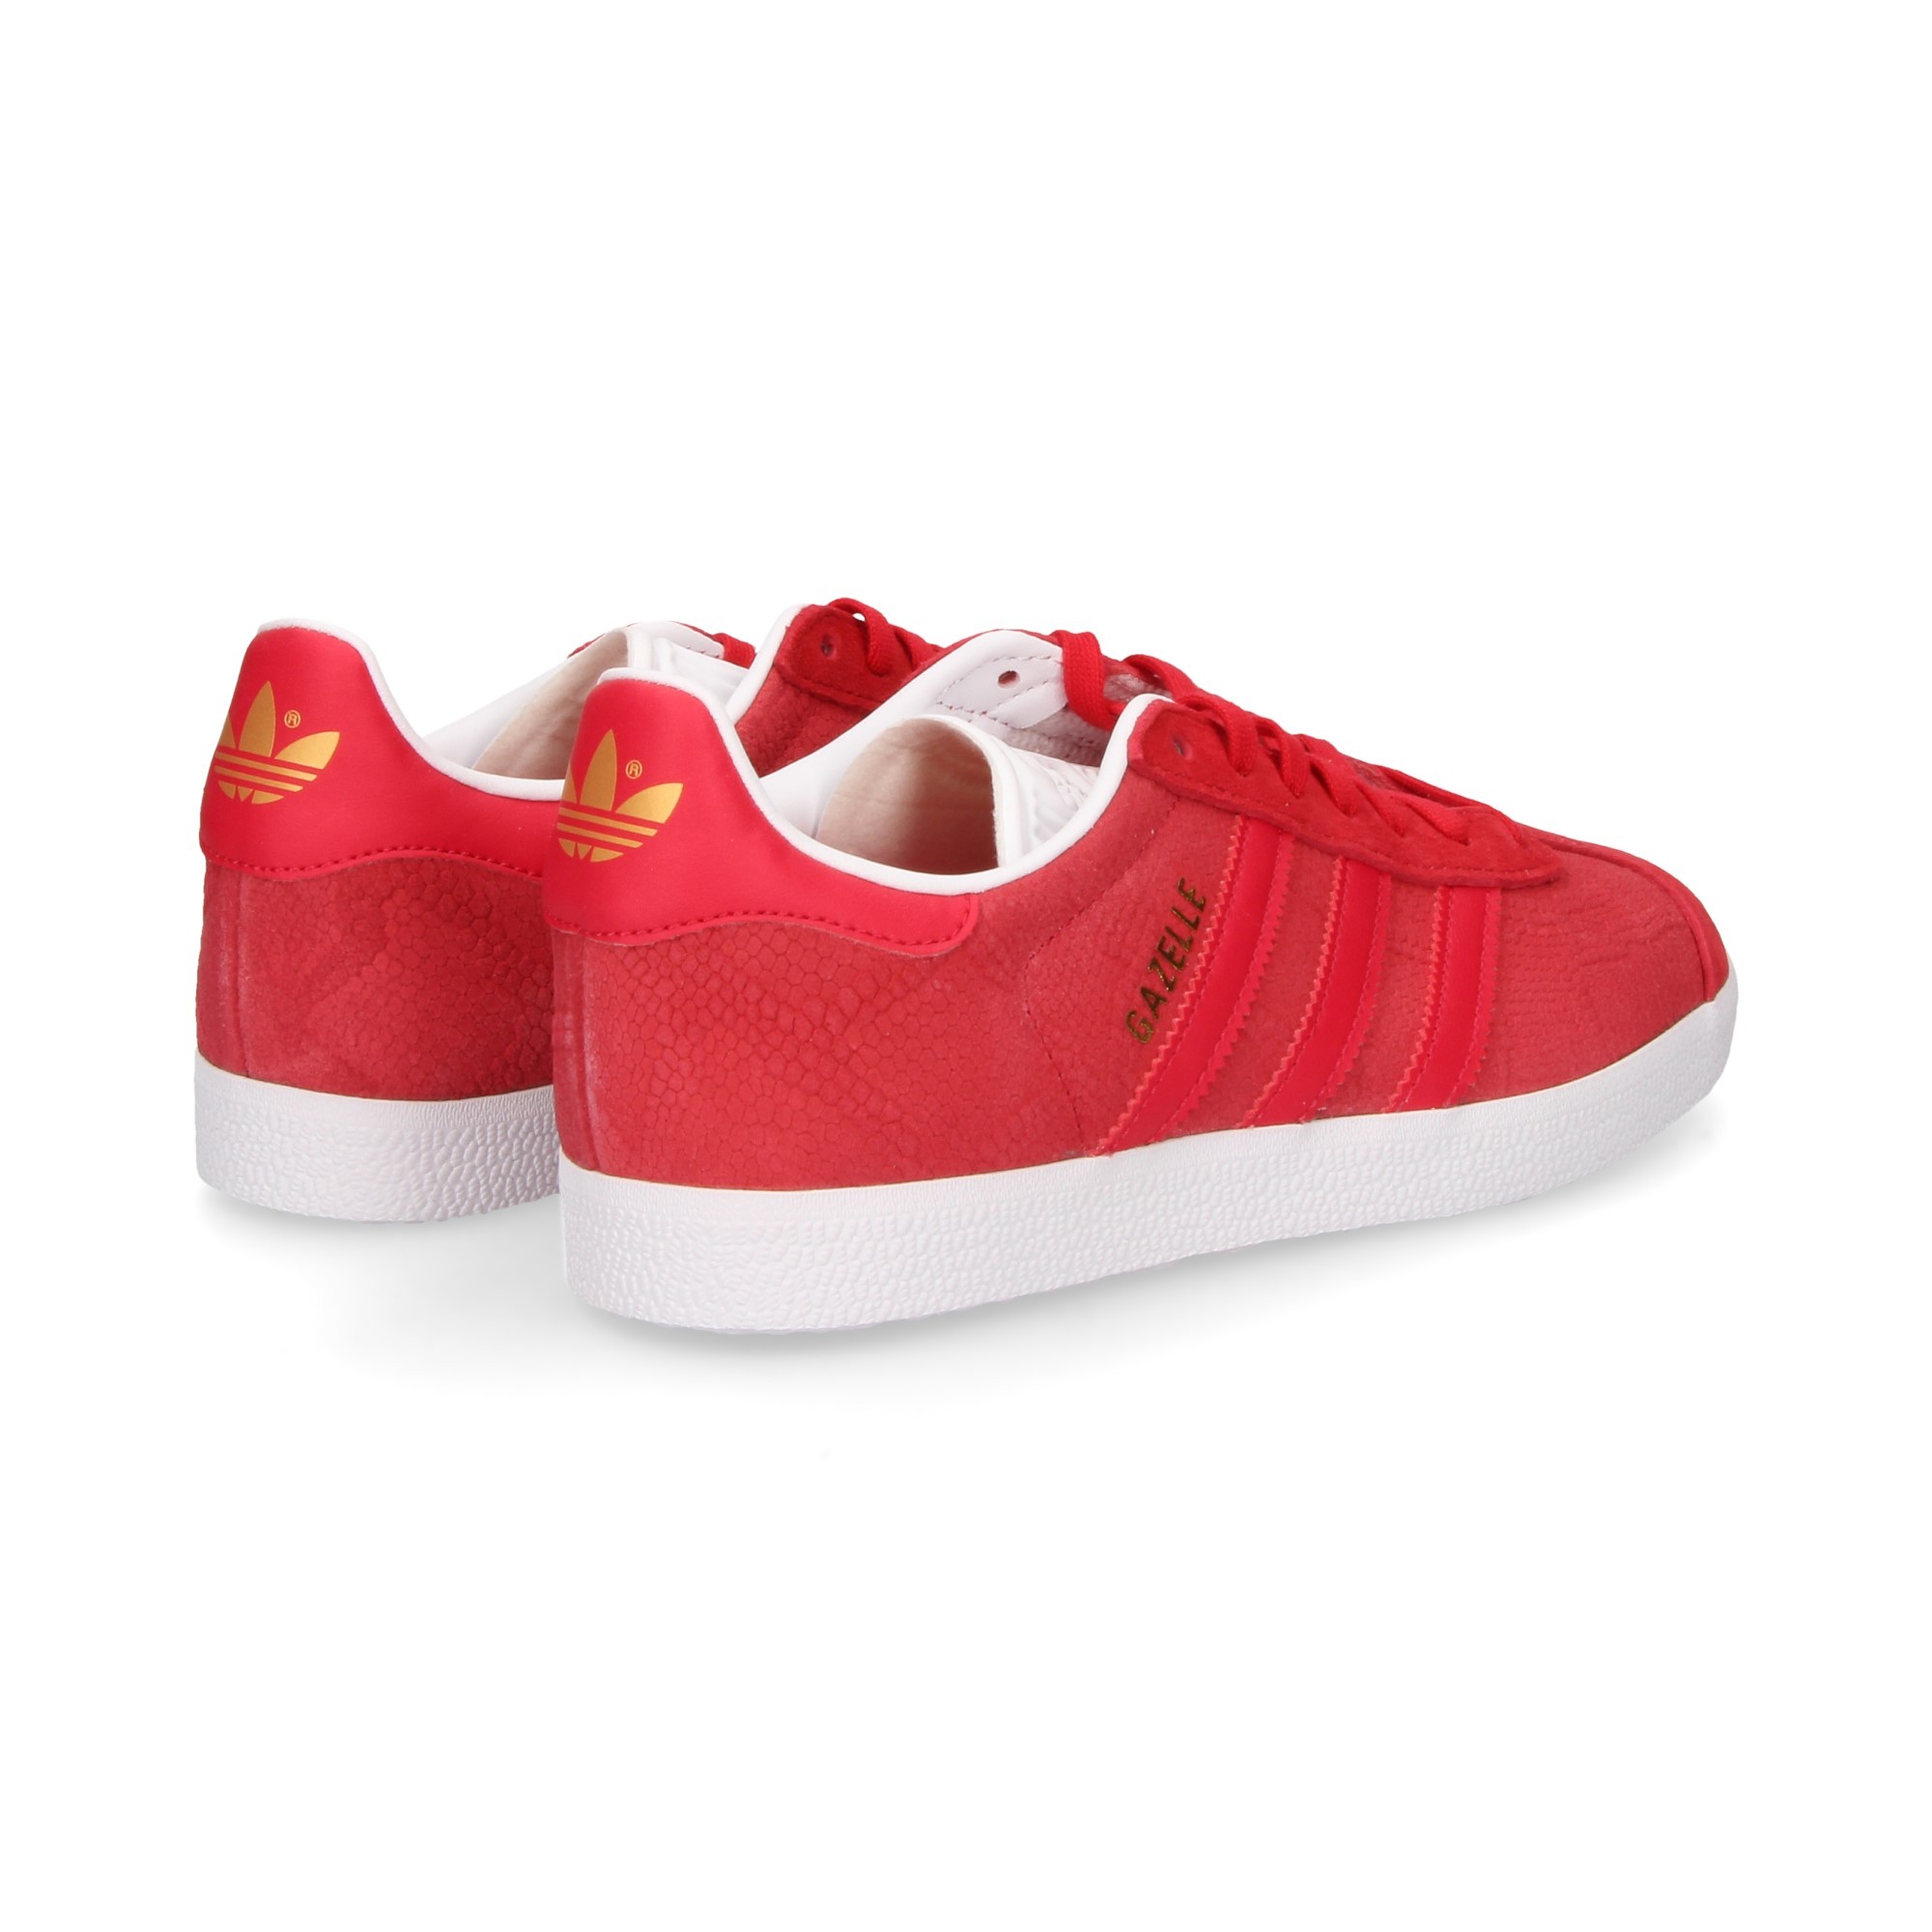 Zapatilla Adidas Gazelle Mujer Rojo - Real Kicks